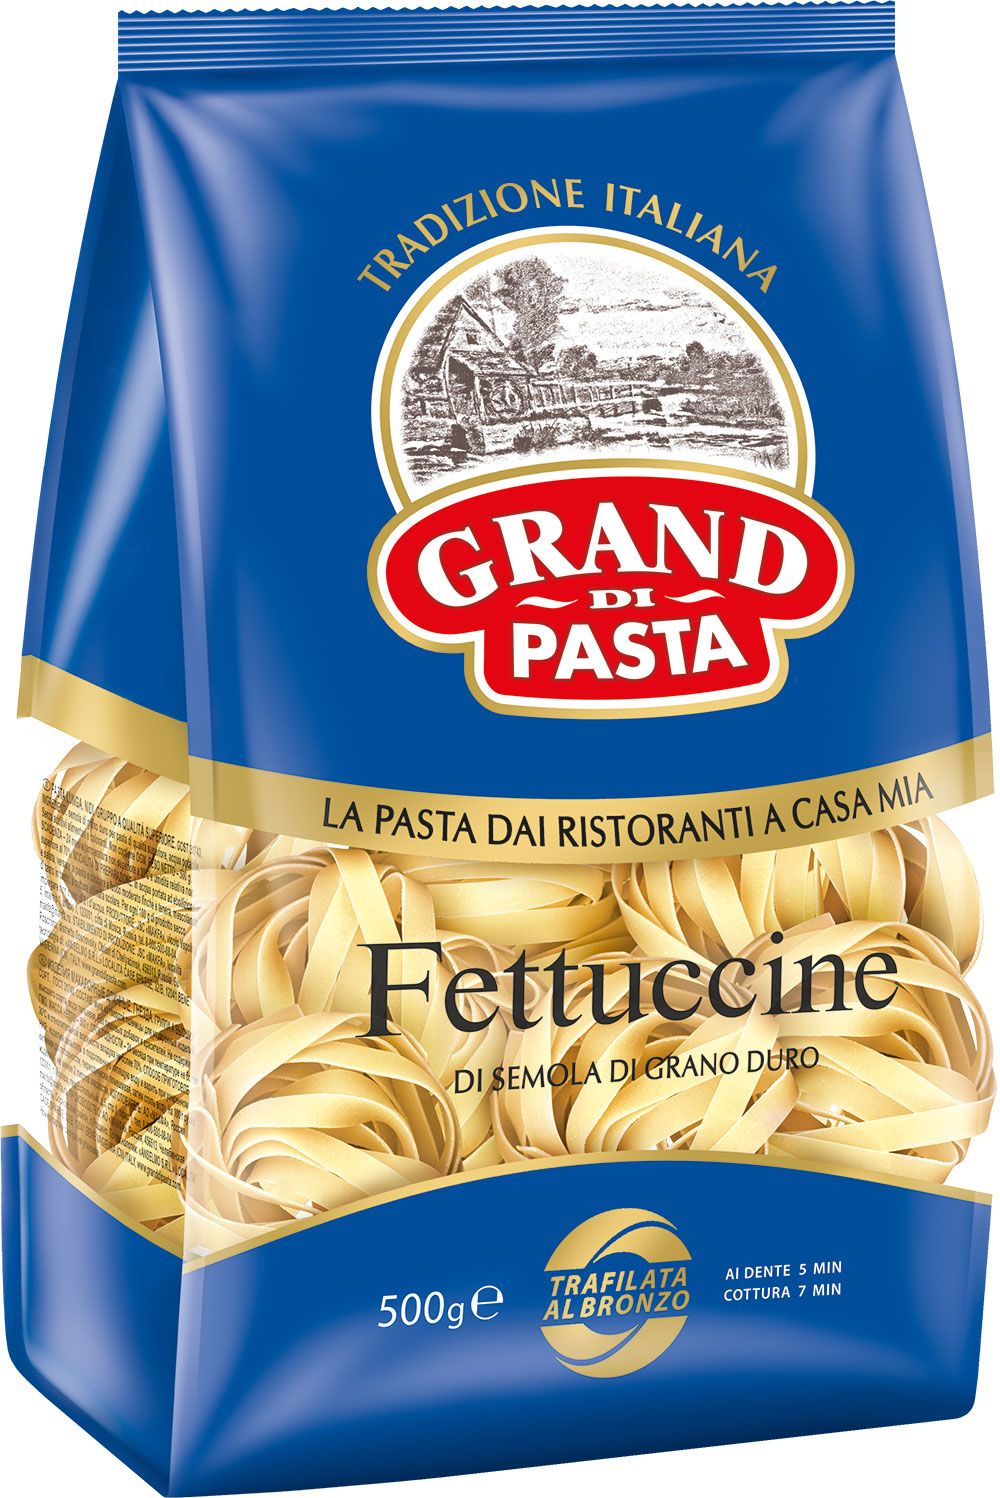 Макароны гнезда купить. Grand di pasta Fettuccine 500 г. Макаронные изделия "Grand di pasta" funghetti, 500г. Макаронные изделия Grand di pasta, 500гр. Макароны Grand di pasta 500 гр Fusilli.